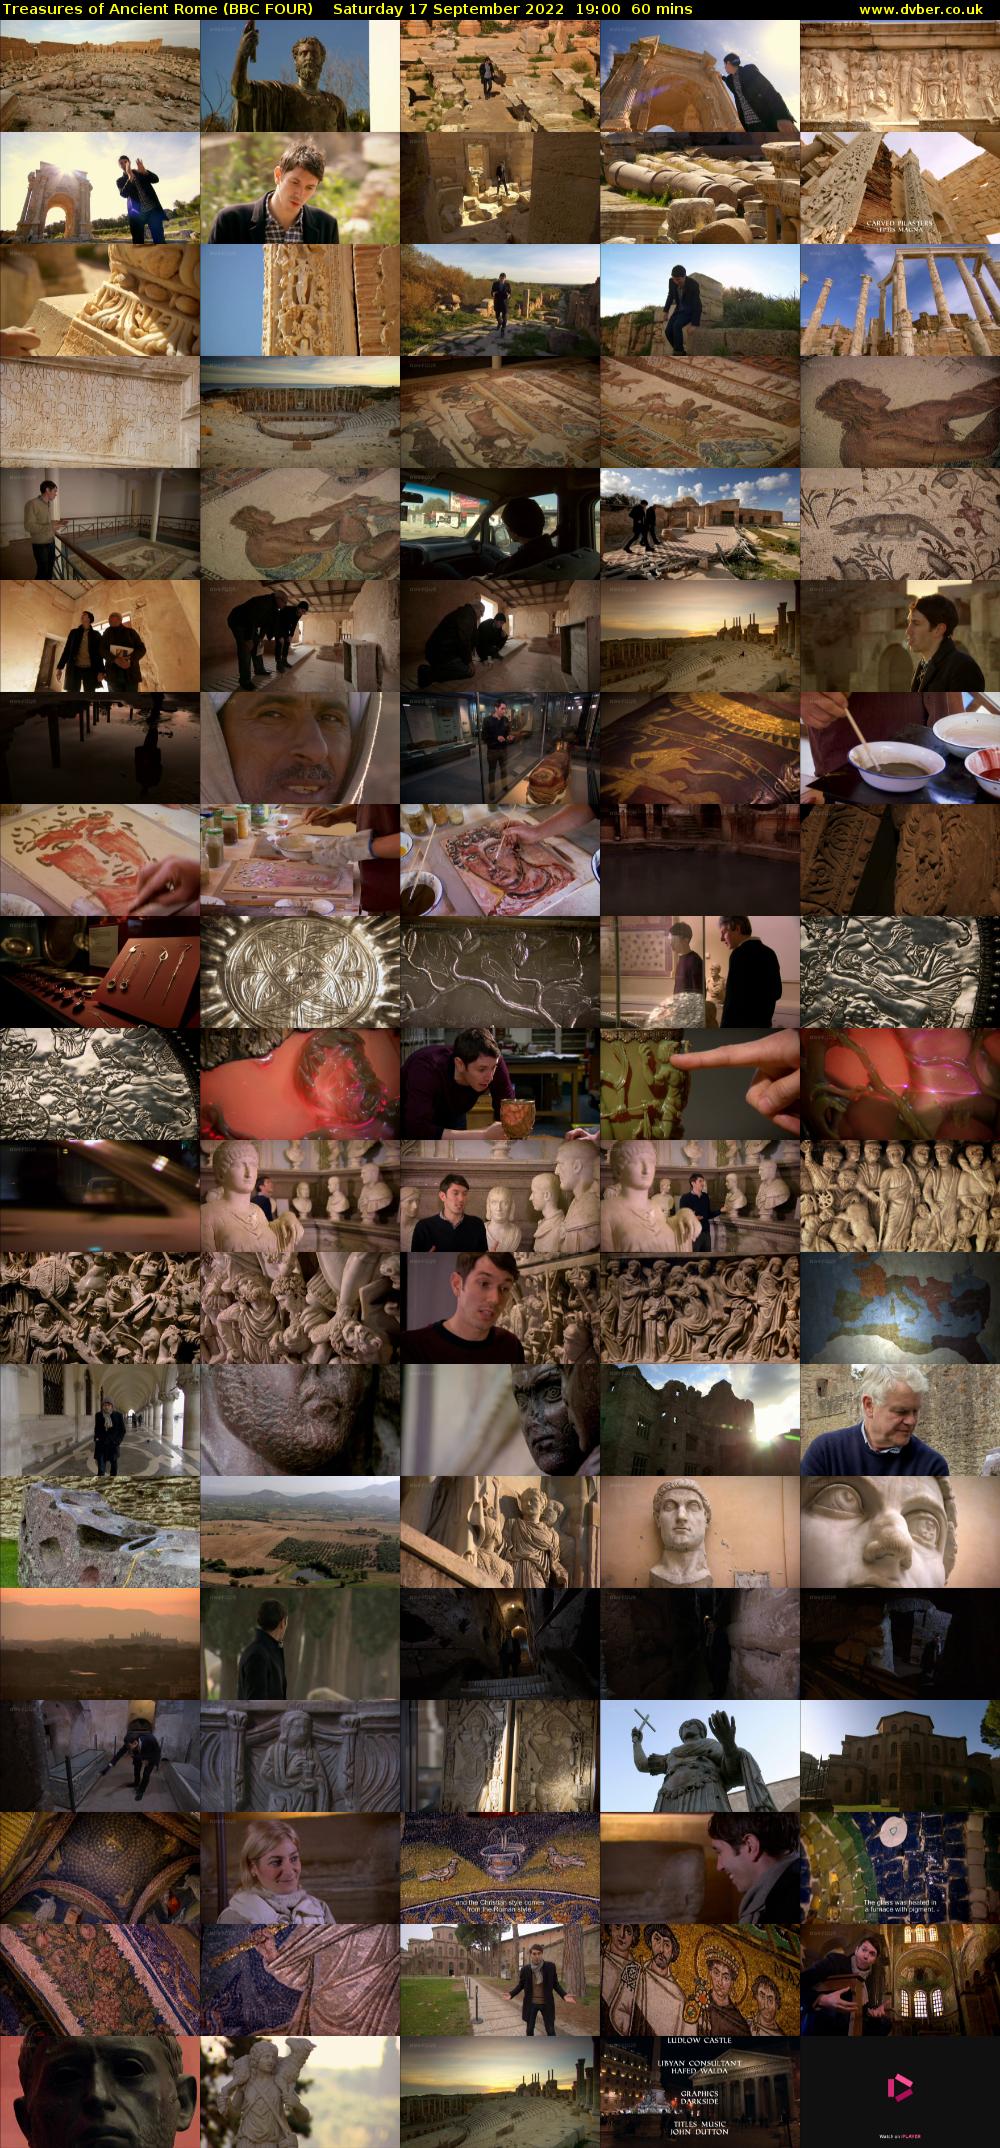 Treasures of Ancient Rome (BBC FOUR) Saturday 17 September 2022 19:00 - 20:00